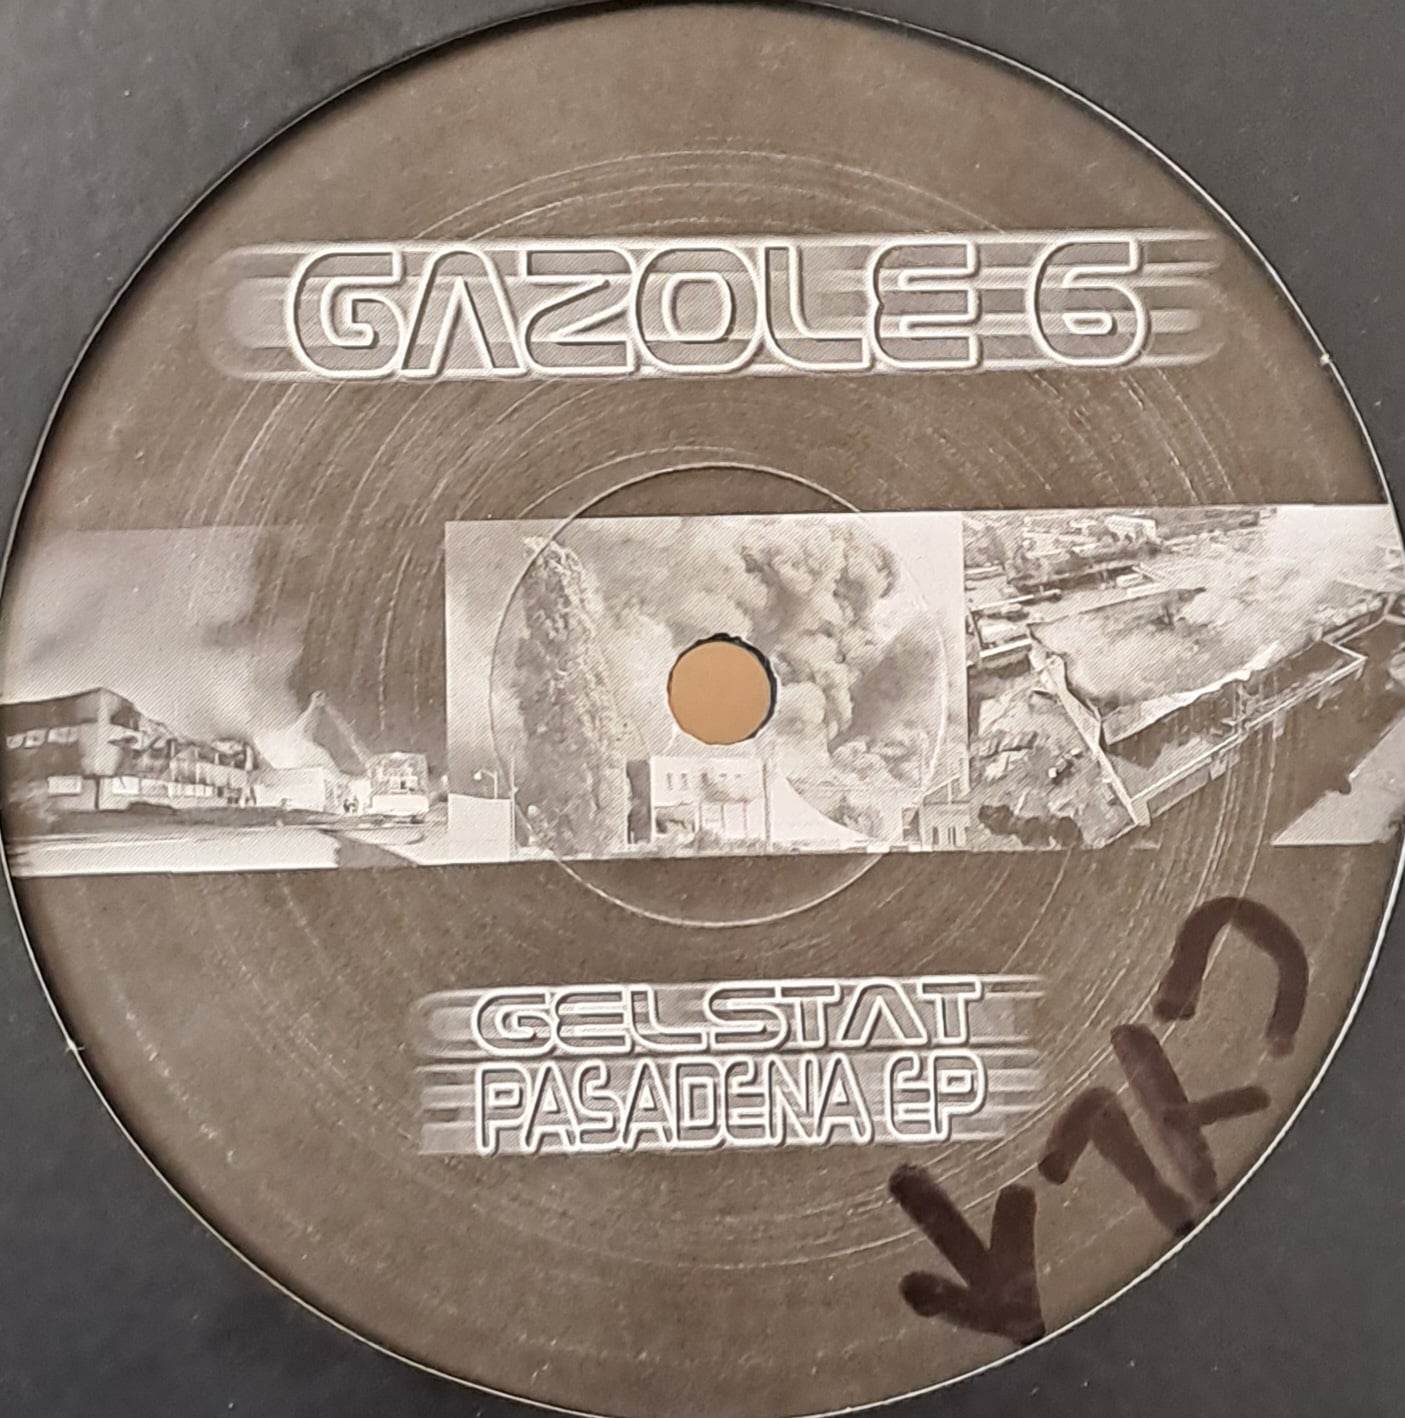 1) Gazole 06 - vinyle hard techno